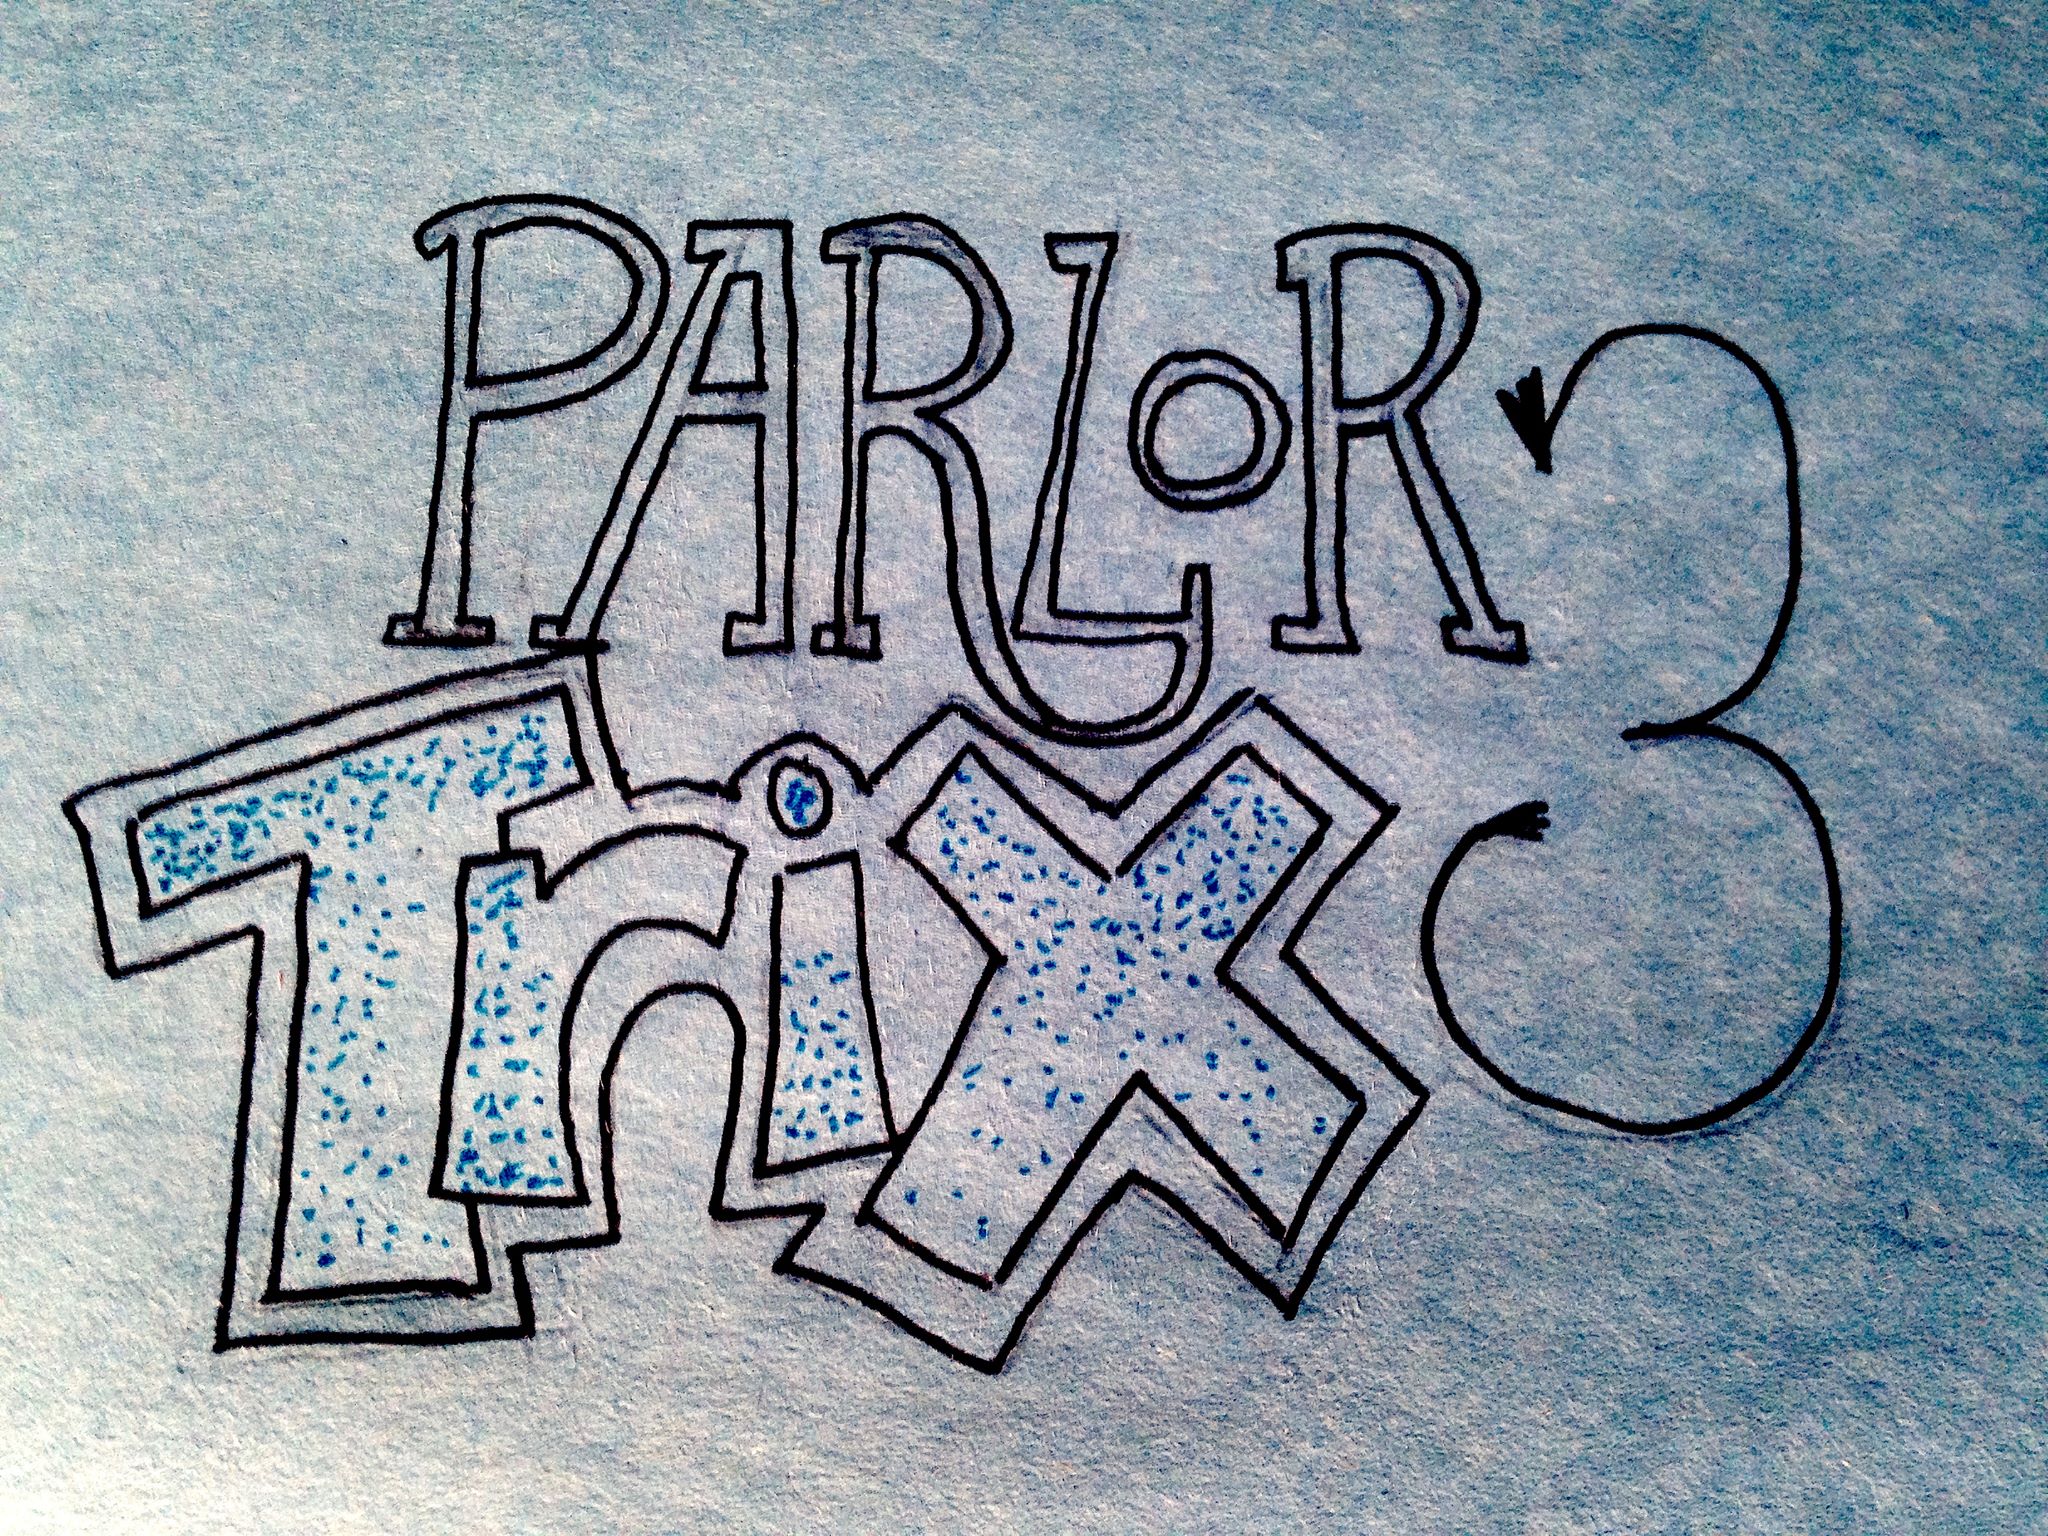 Tonight: Parlor Trix #3